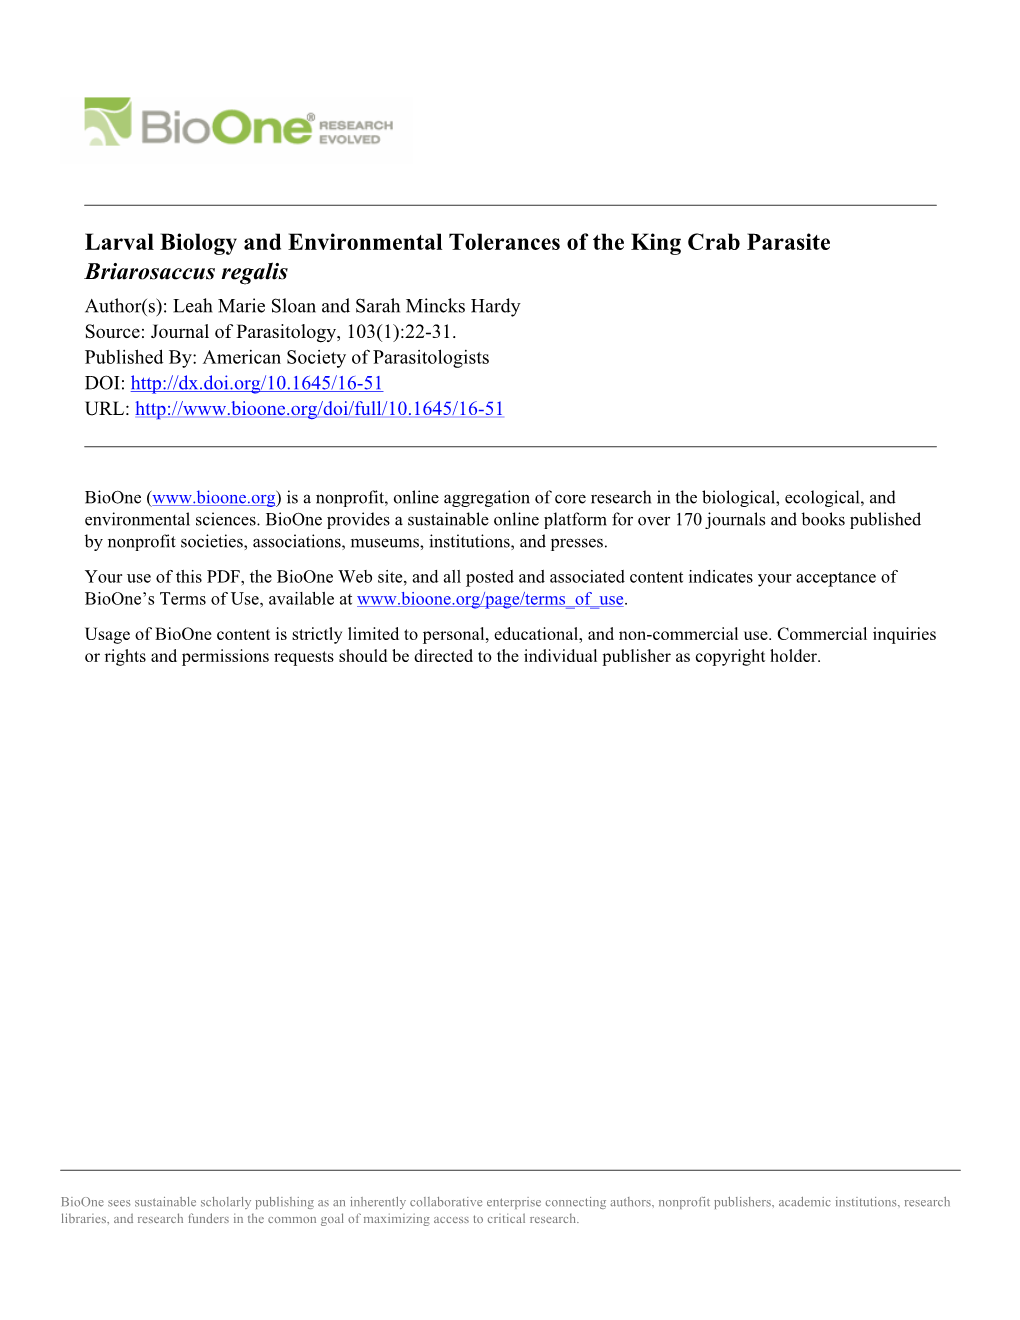 Larval Biology and Environmental Tolerances of the King Crab Parasite Briarosaccus Regalis